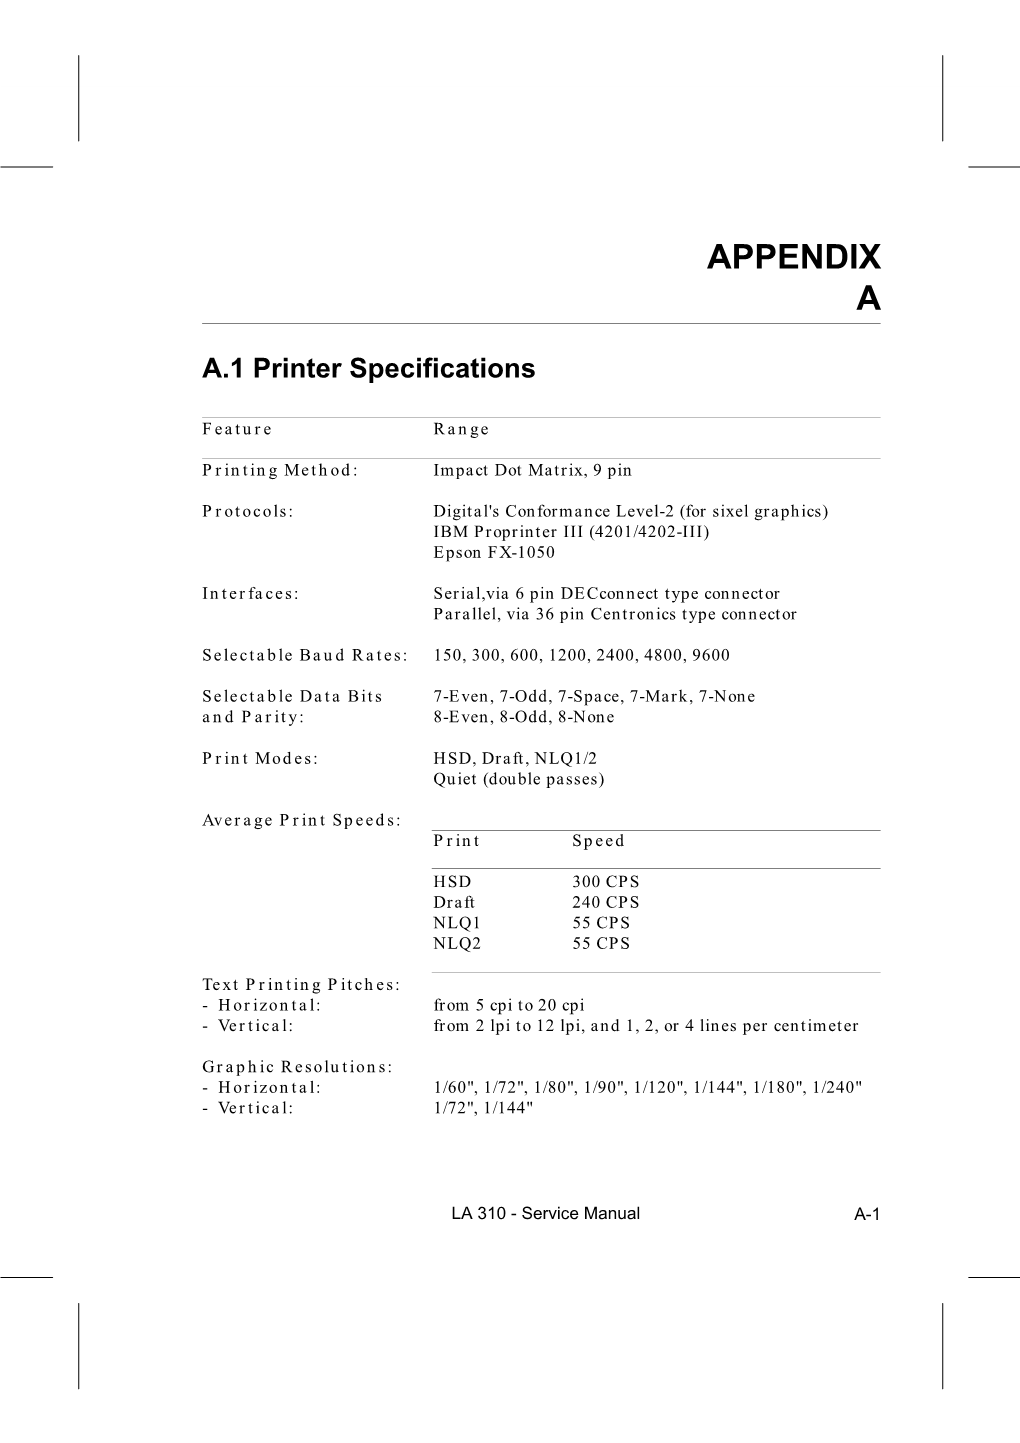 LA310 Multiprinter Service Guide Part 2